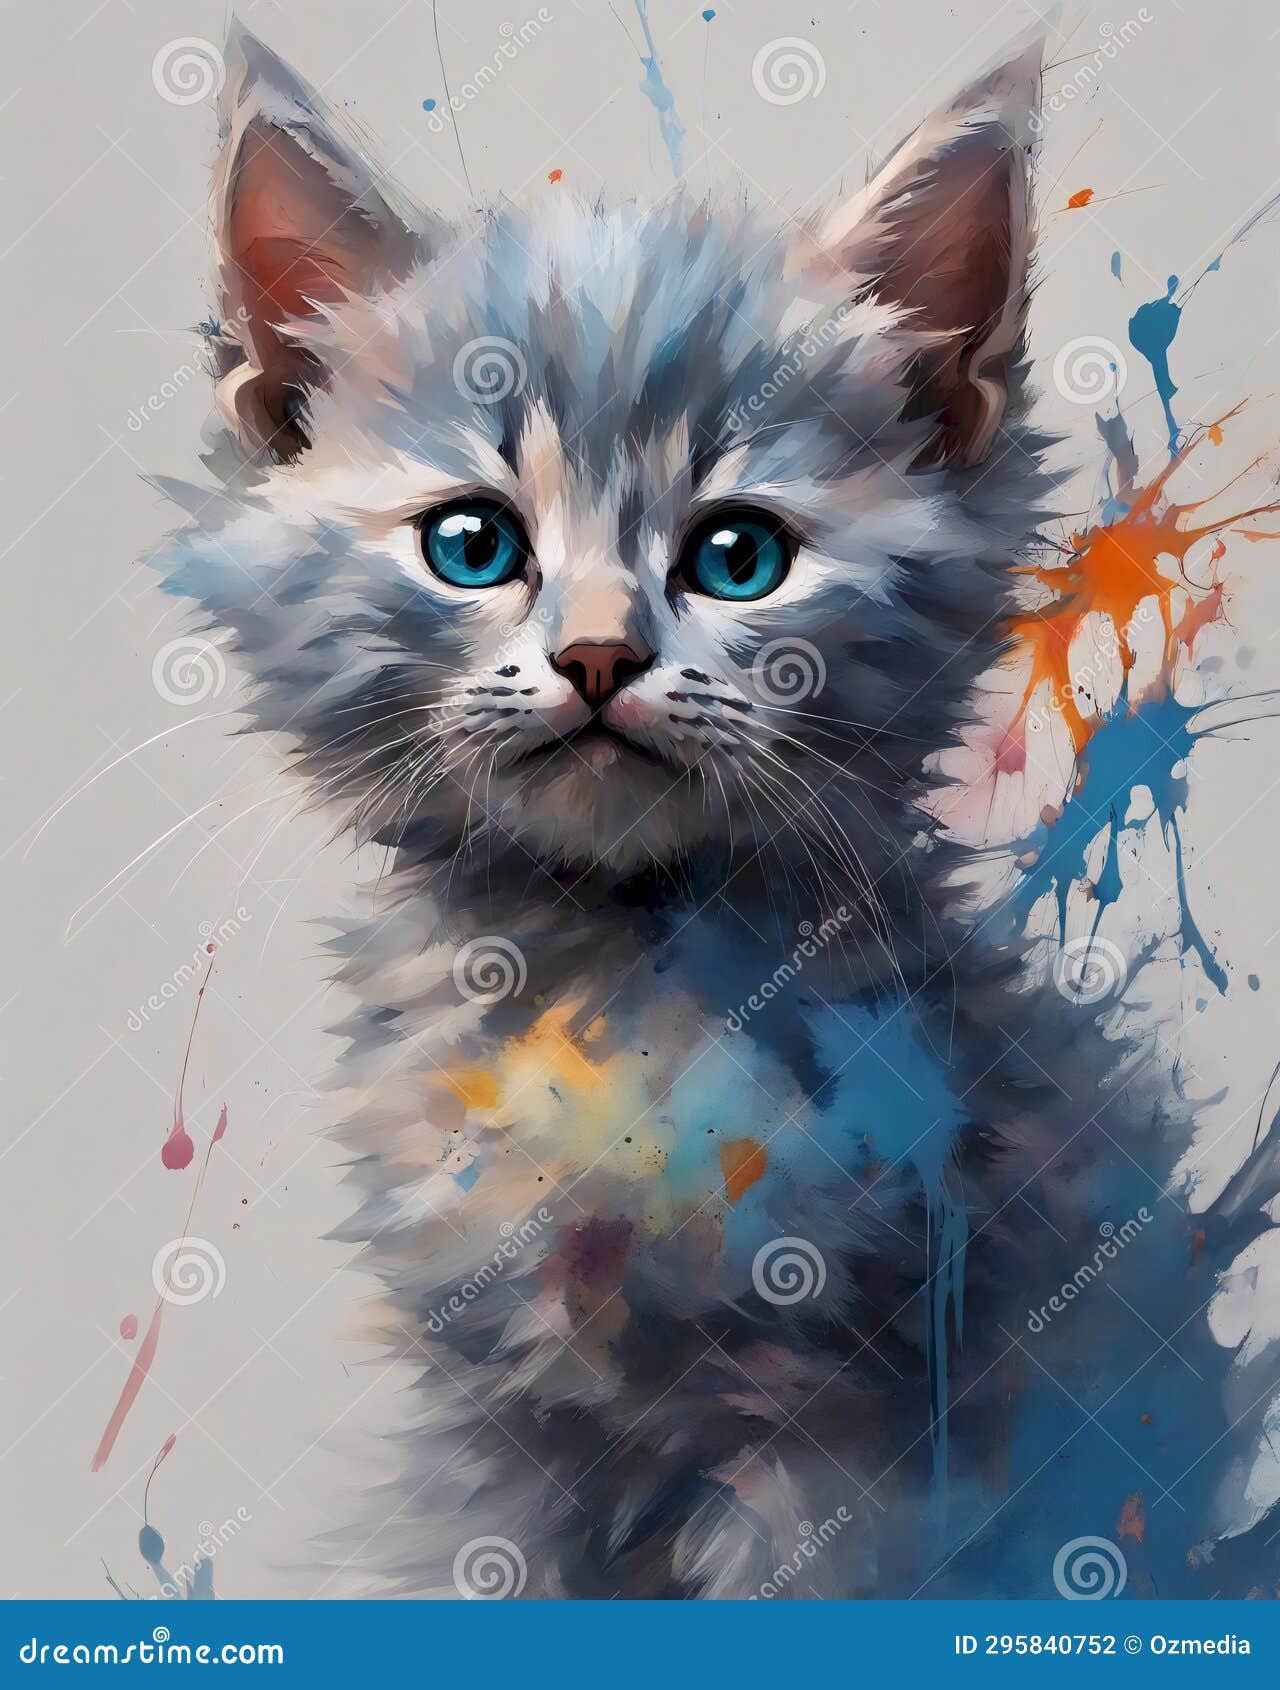 kitten amidst a colorful ink splatter